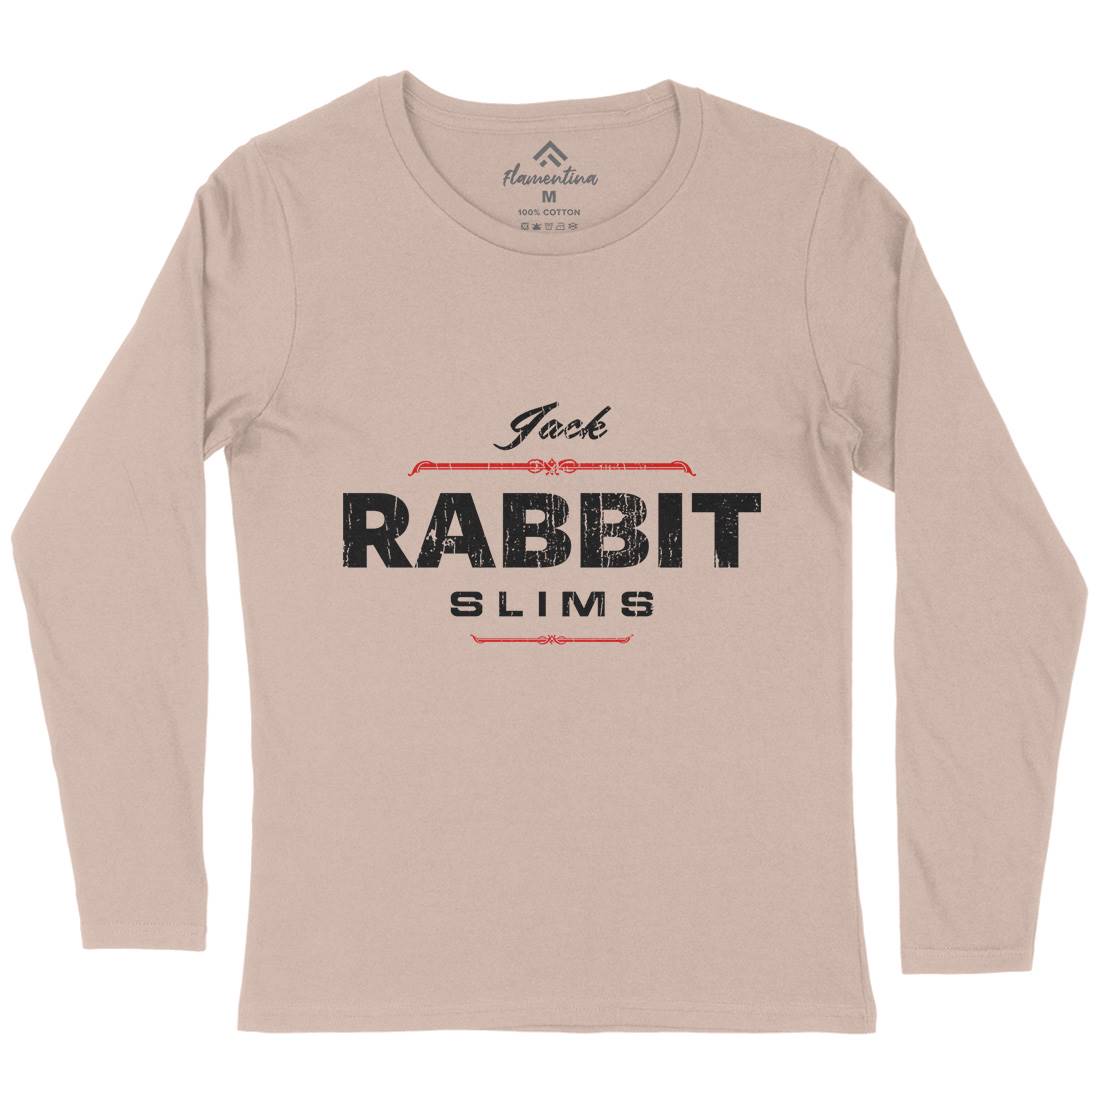 Jack Rabbit Slims Womens Long Sleeve T-Shirt Retro D383